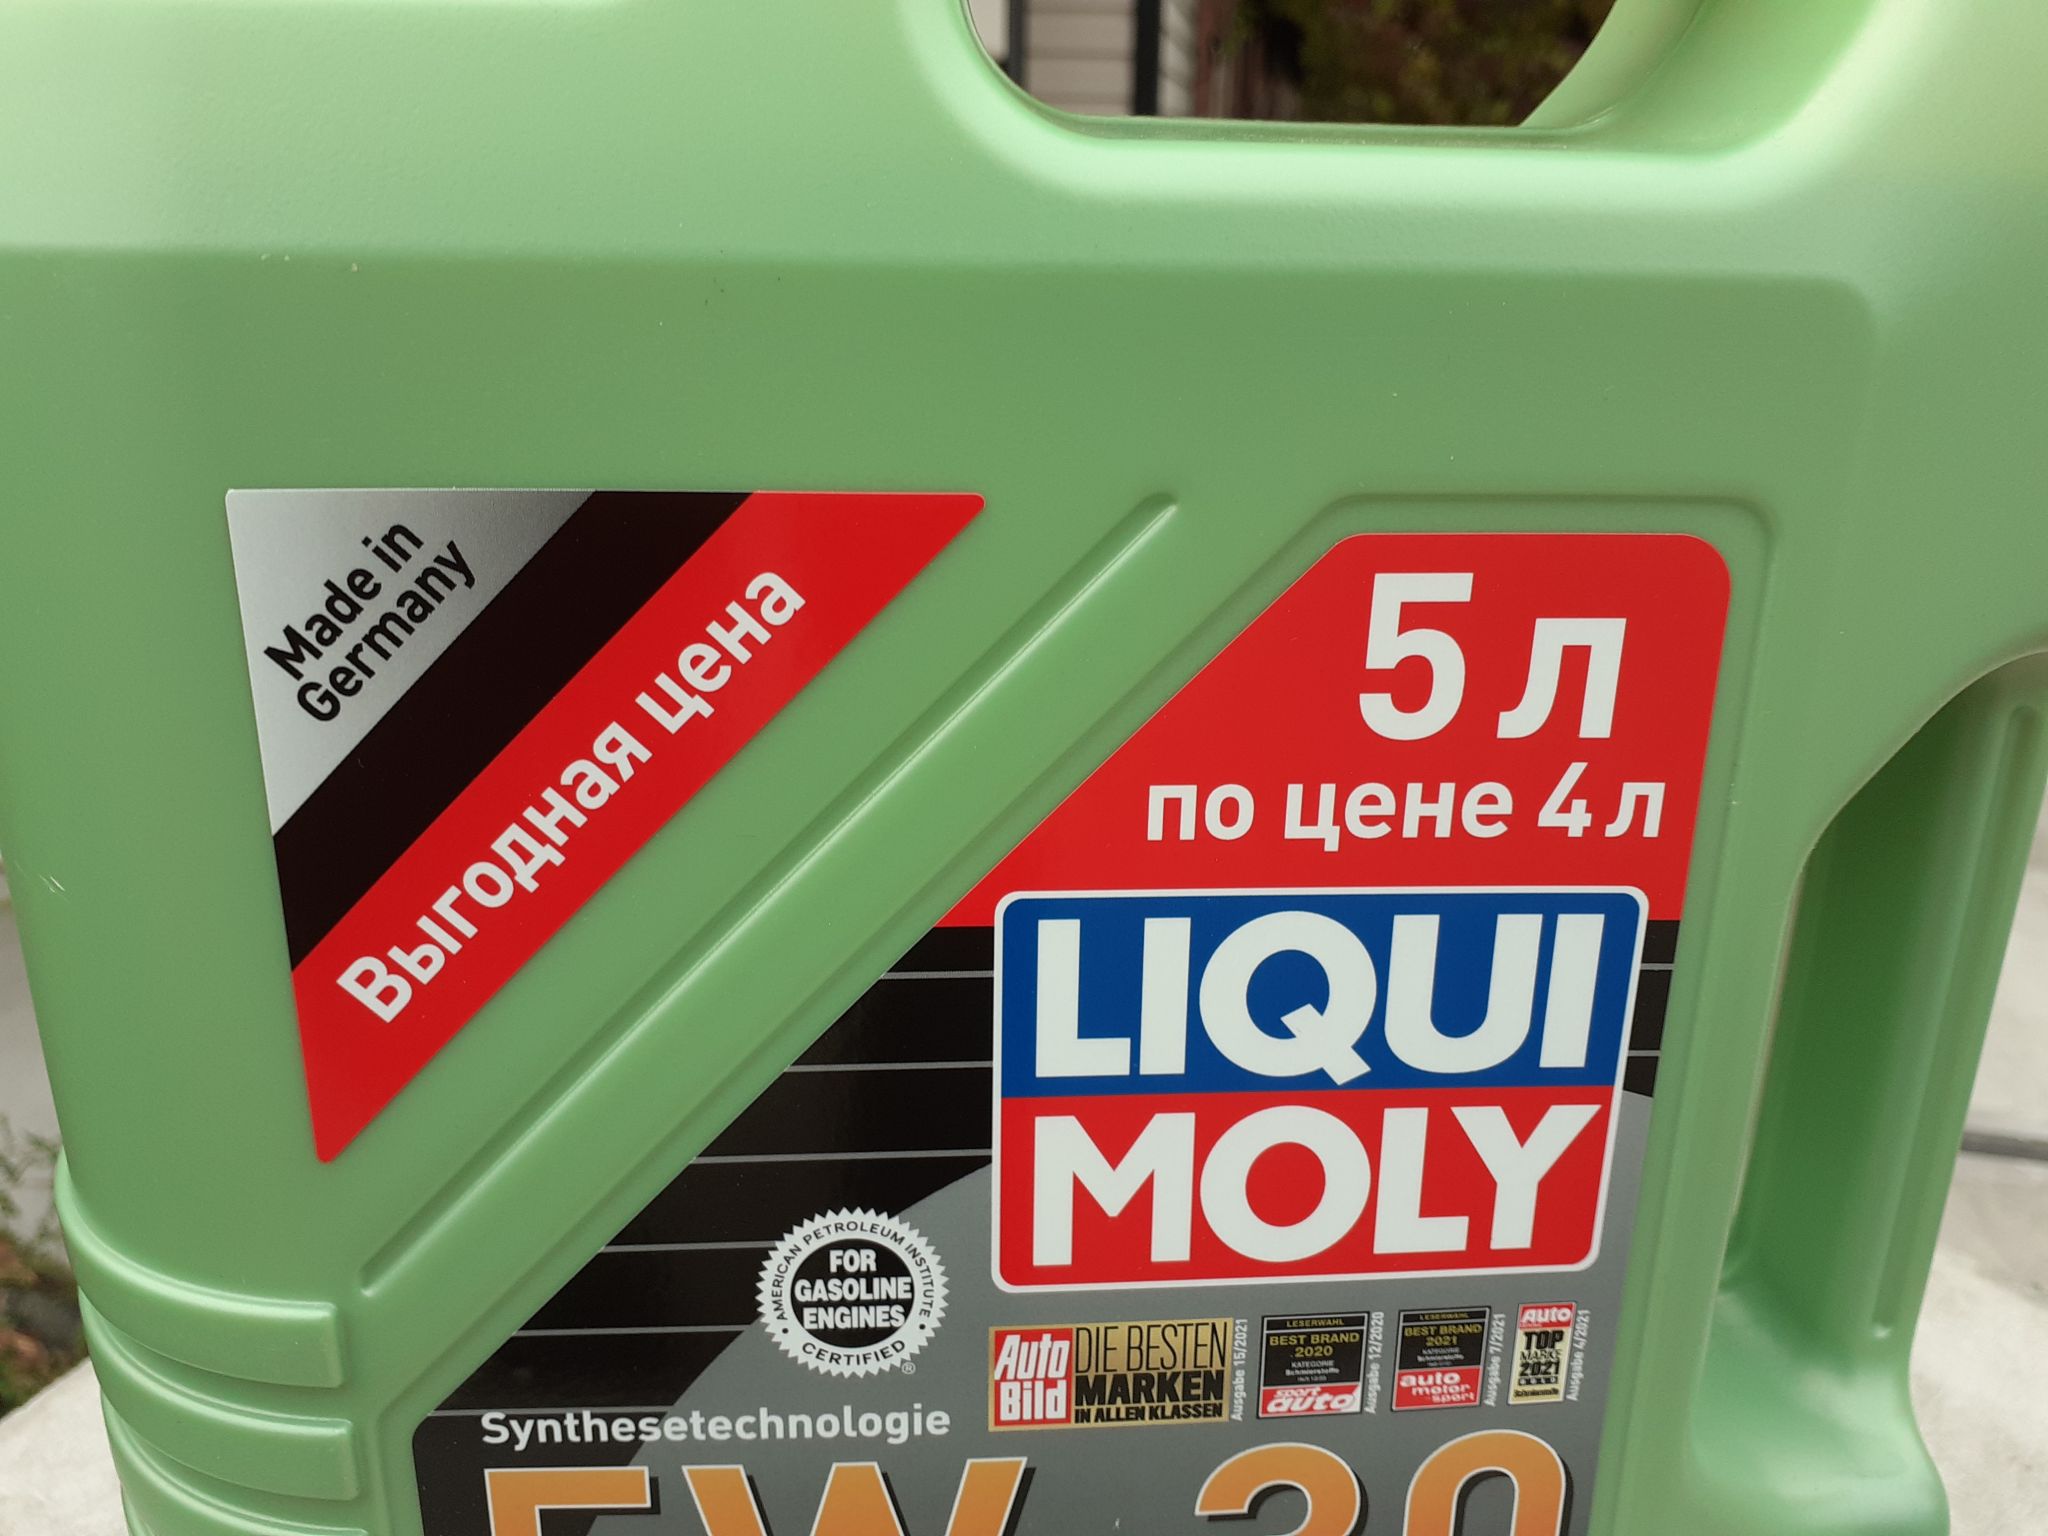 Моторное масло ликви моли молиген. Ликви моли молиген 5w30. Масло Liqui Moly 5w30 Molygen New Generation. 5w 30 Liqui Moly 9952. Liqui Moly 5w30 Molygen артикул.